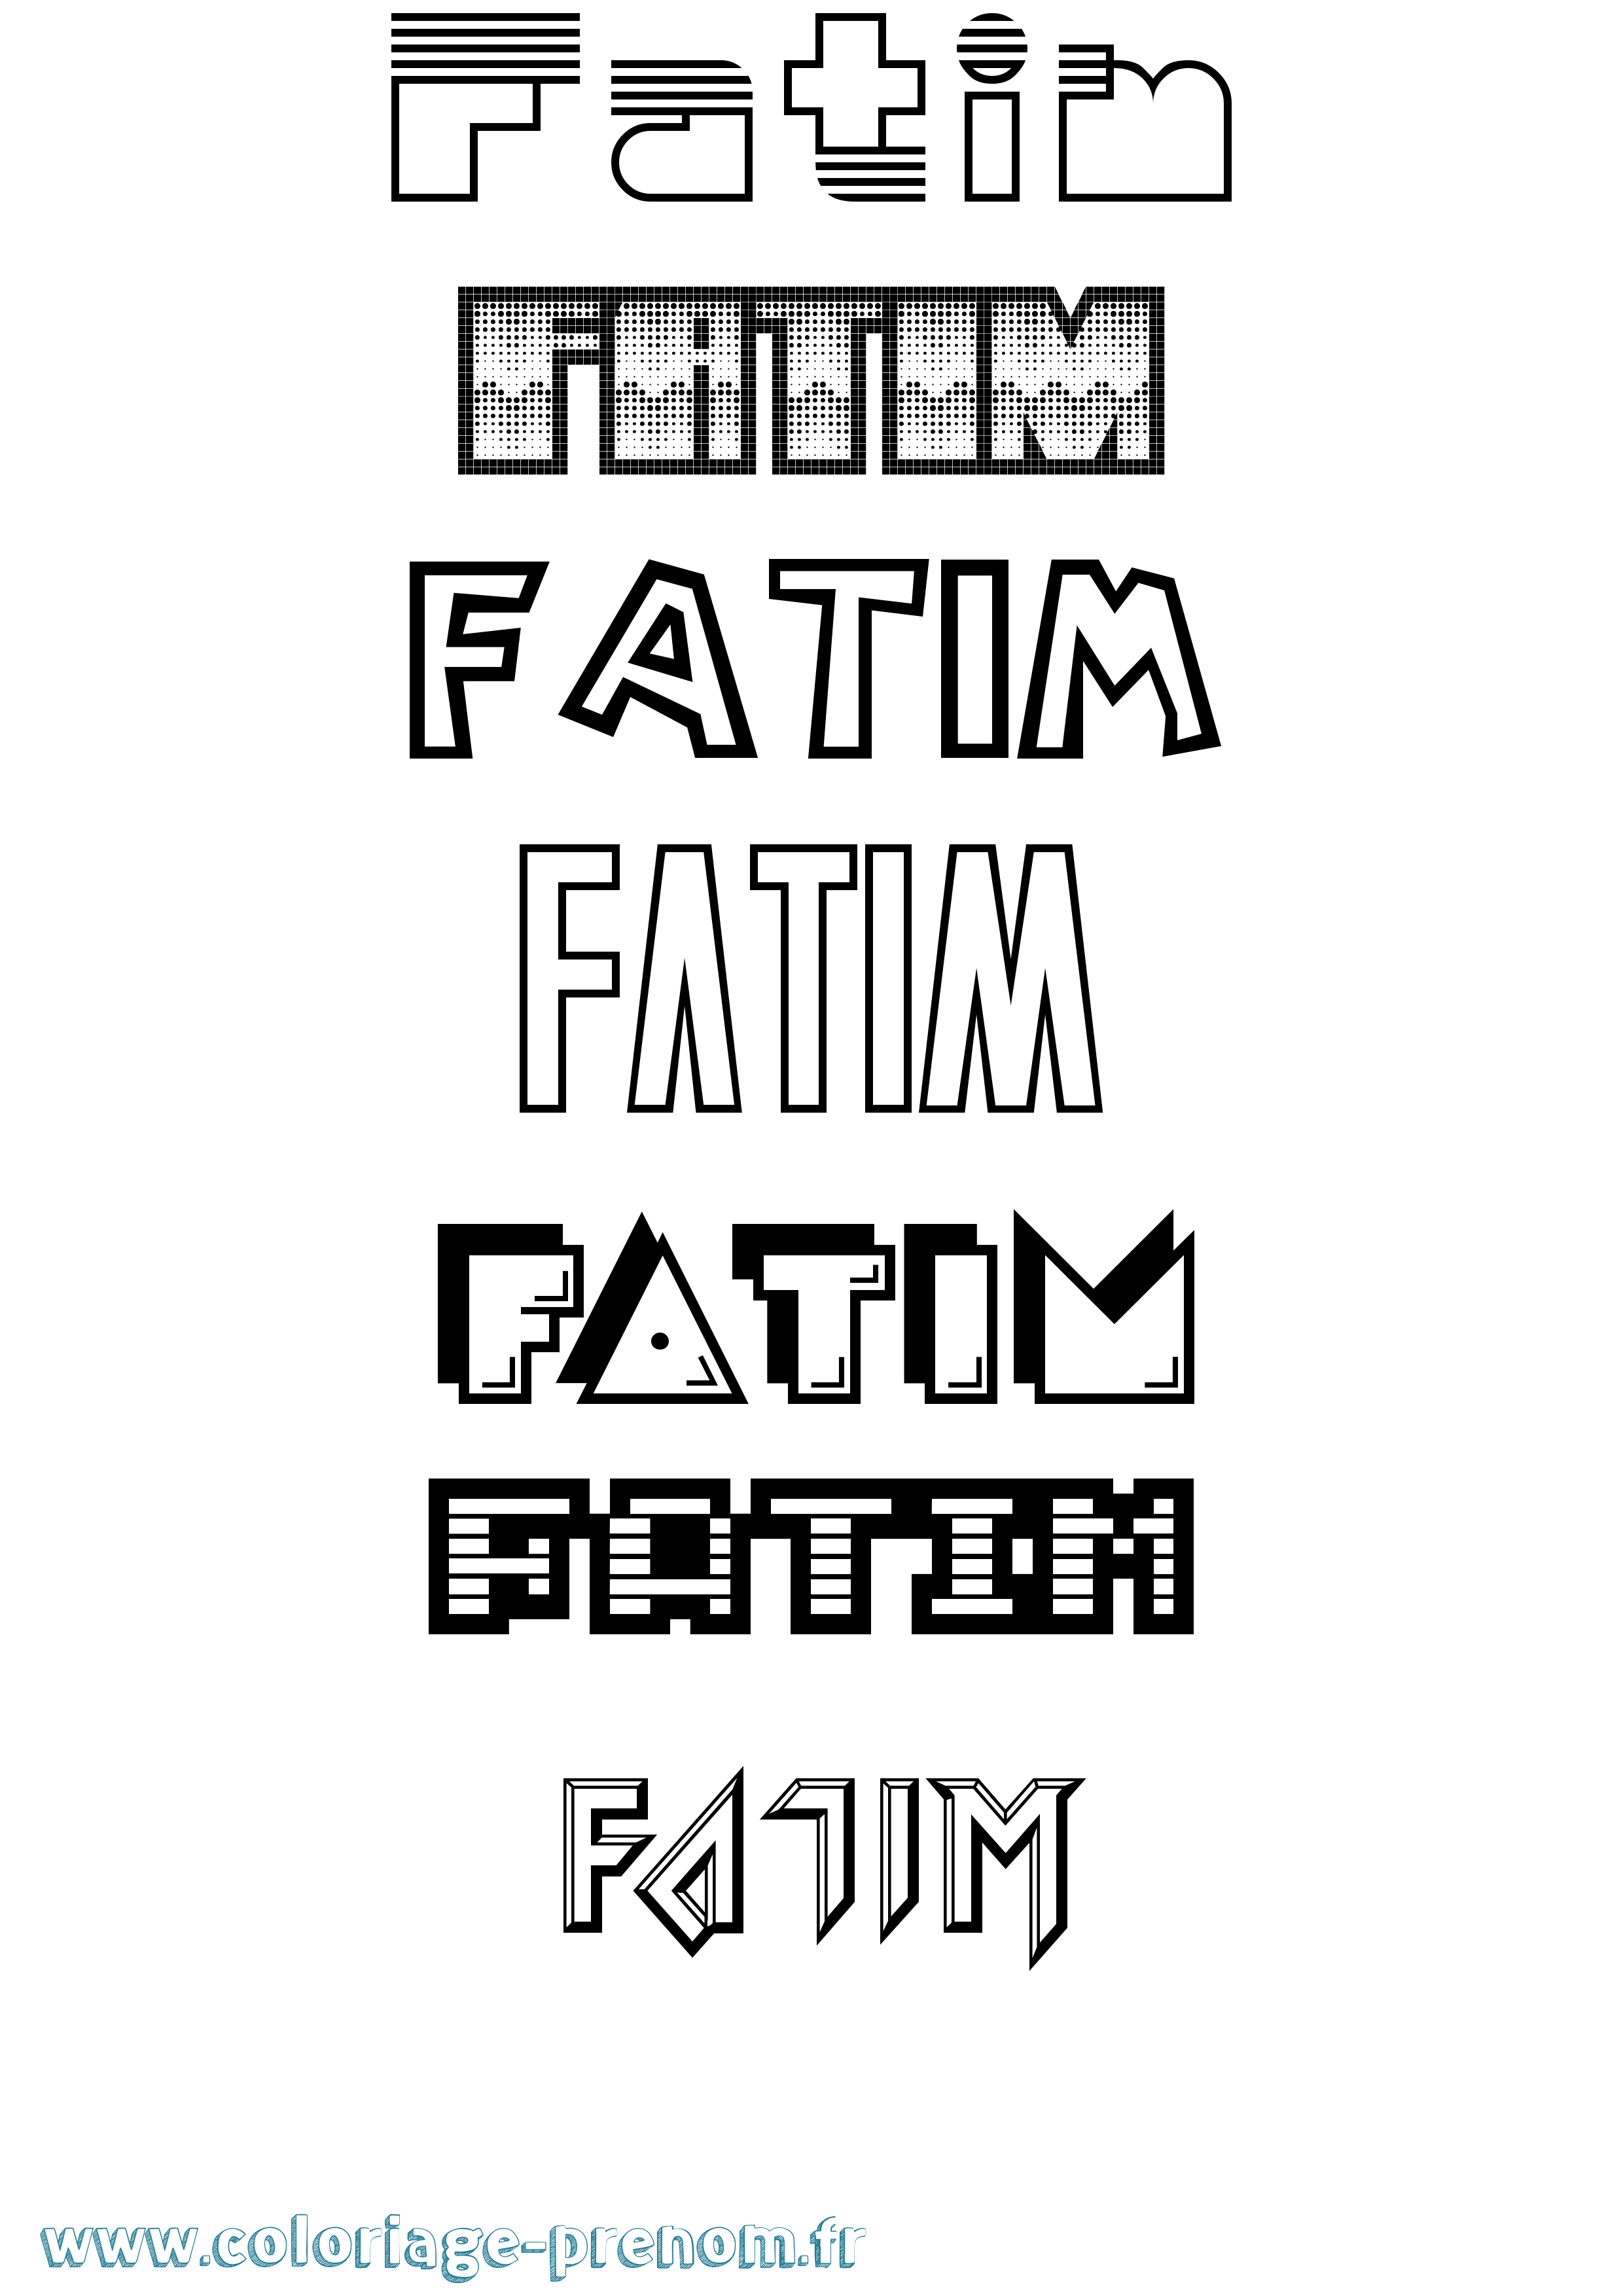 Coloriage prénom Fatim